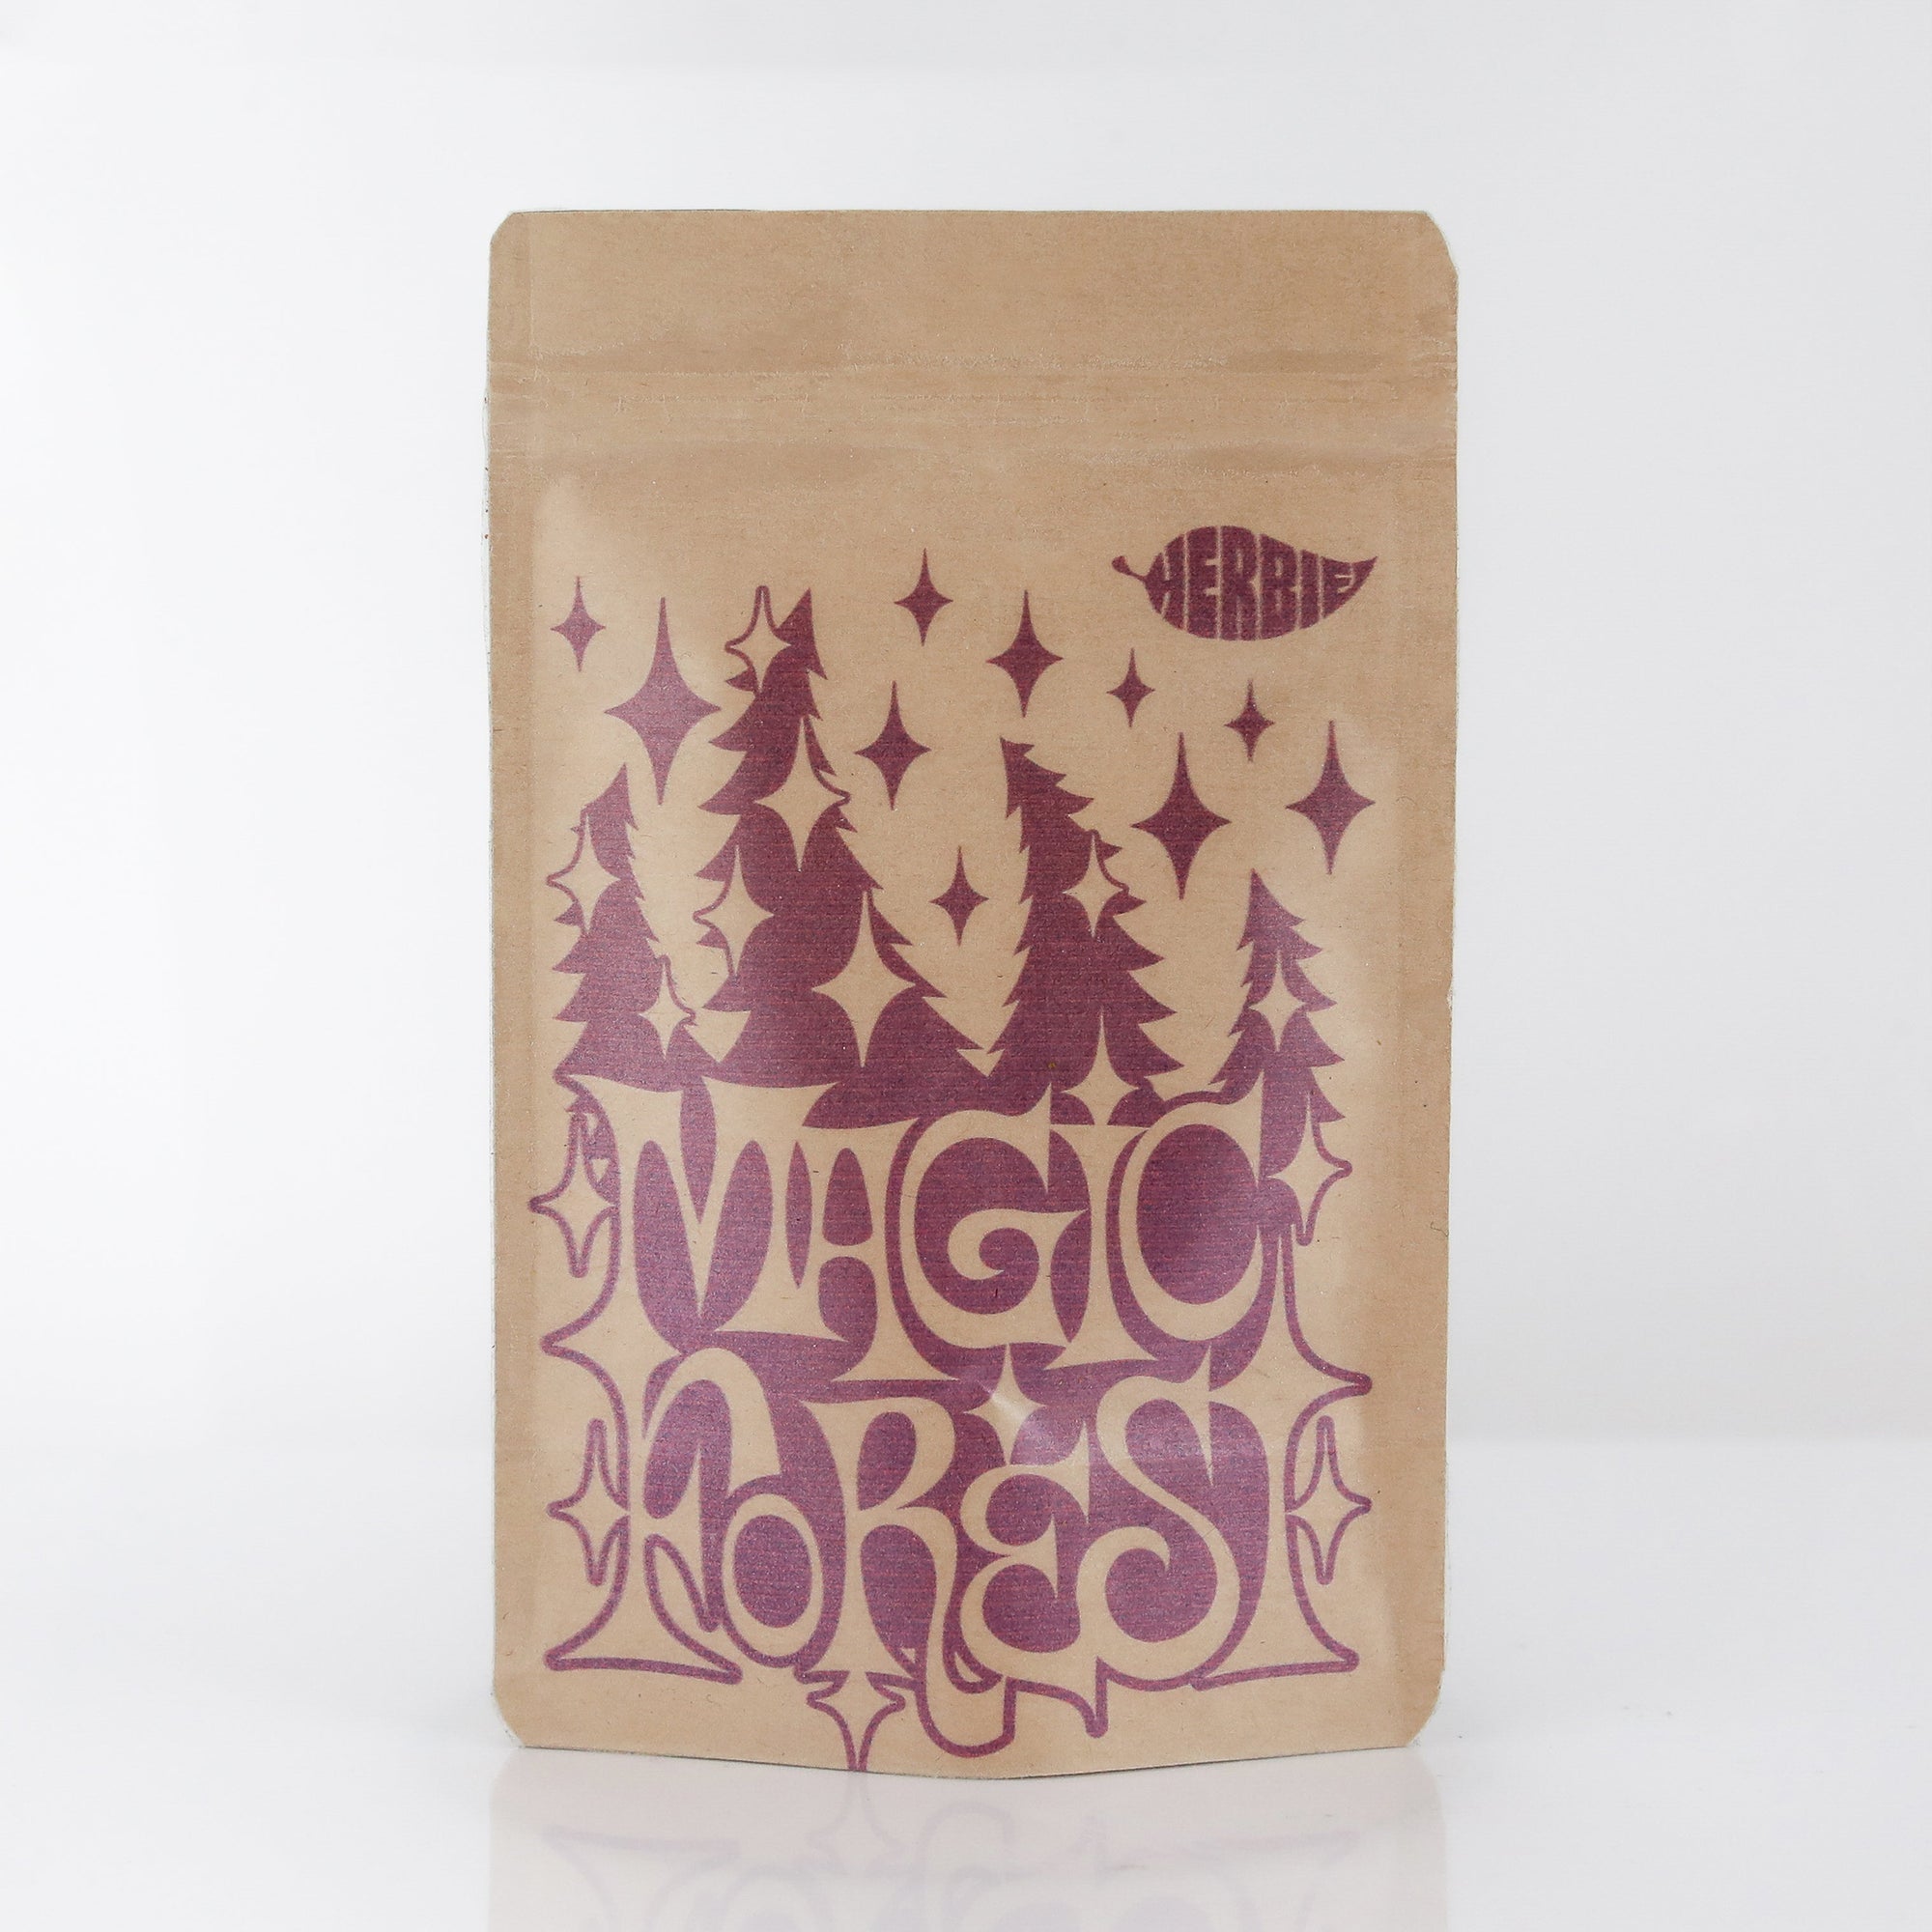 Herbie Magic Forest package (5 grams)